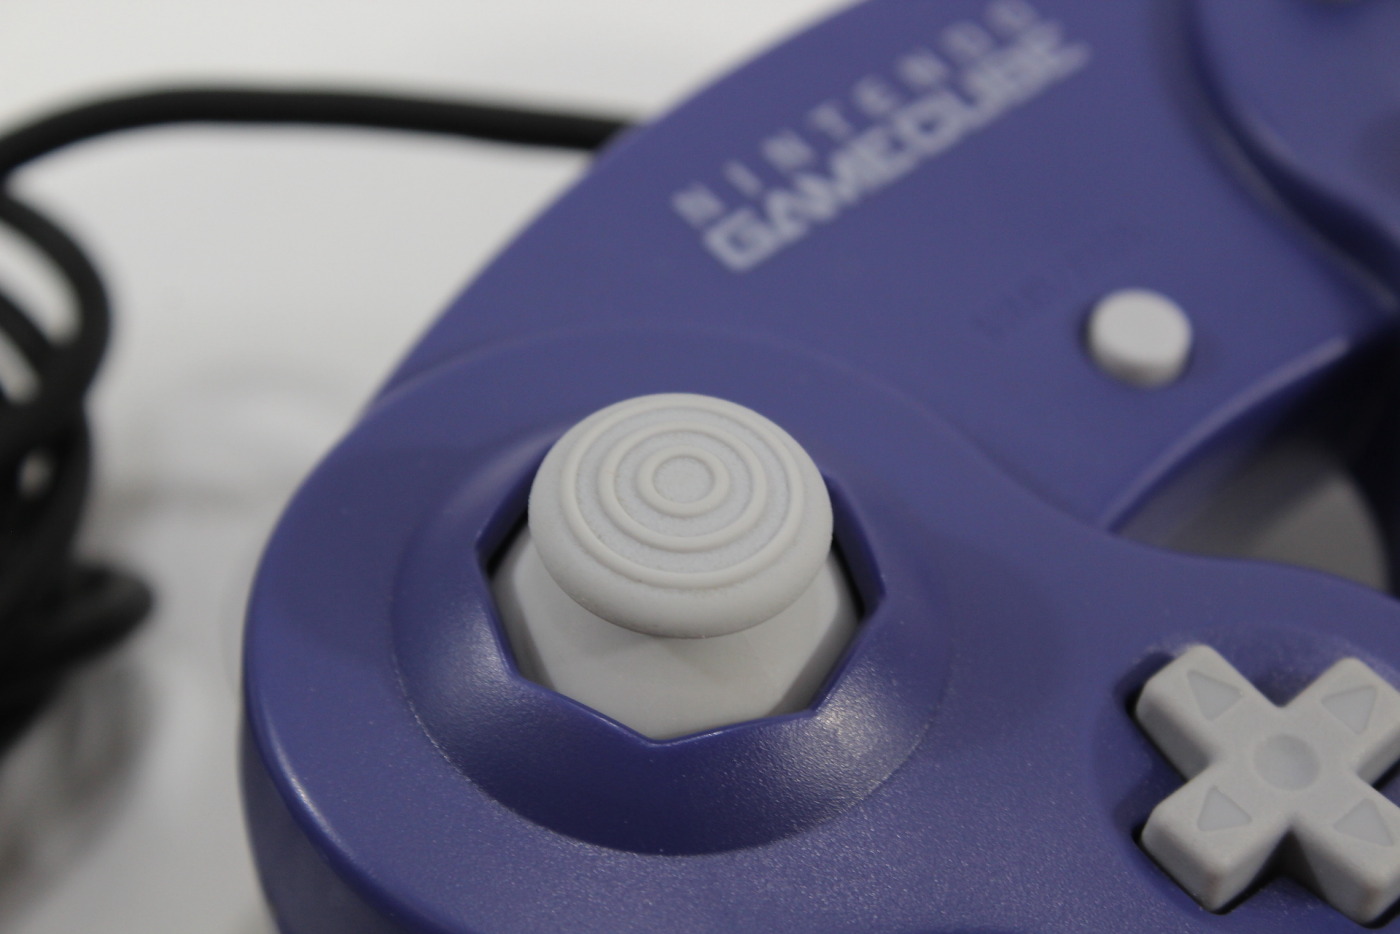 Nintendo GameCube Indigo Purple GC Console US Region+Controllers+Wires  Bundle